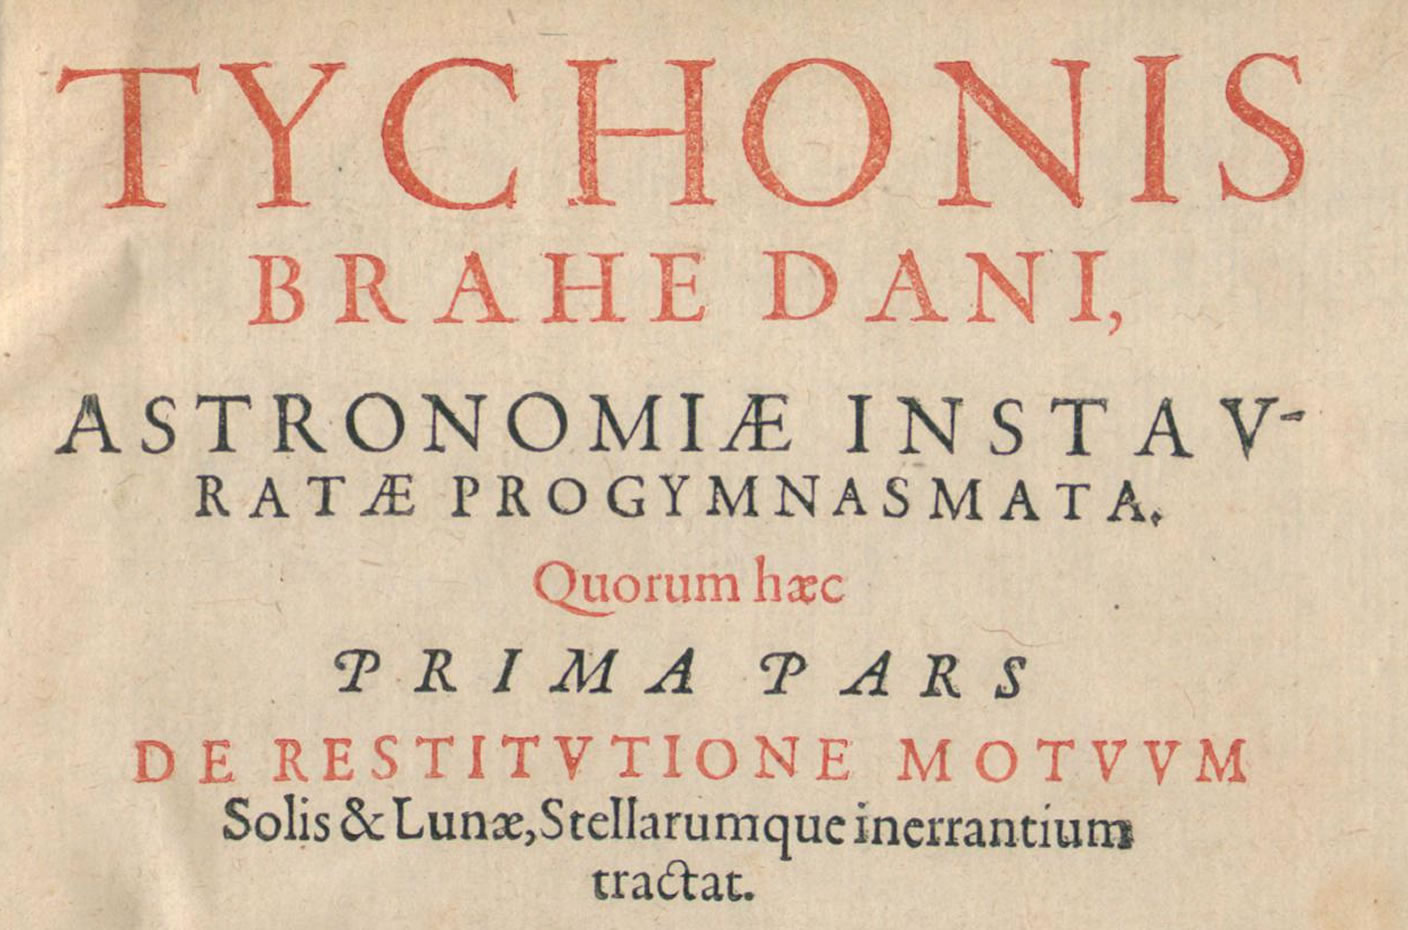 Abbildung des Progymnasmata Tycho Brahe